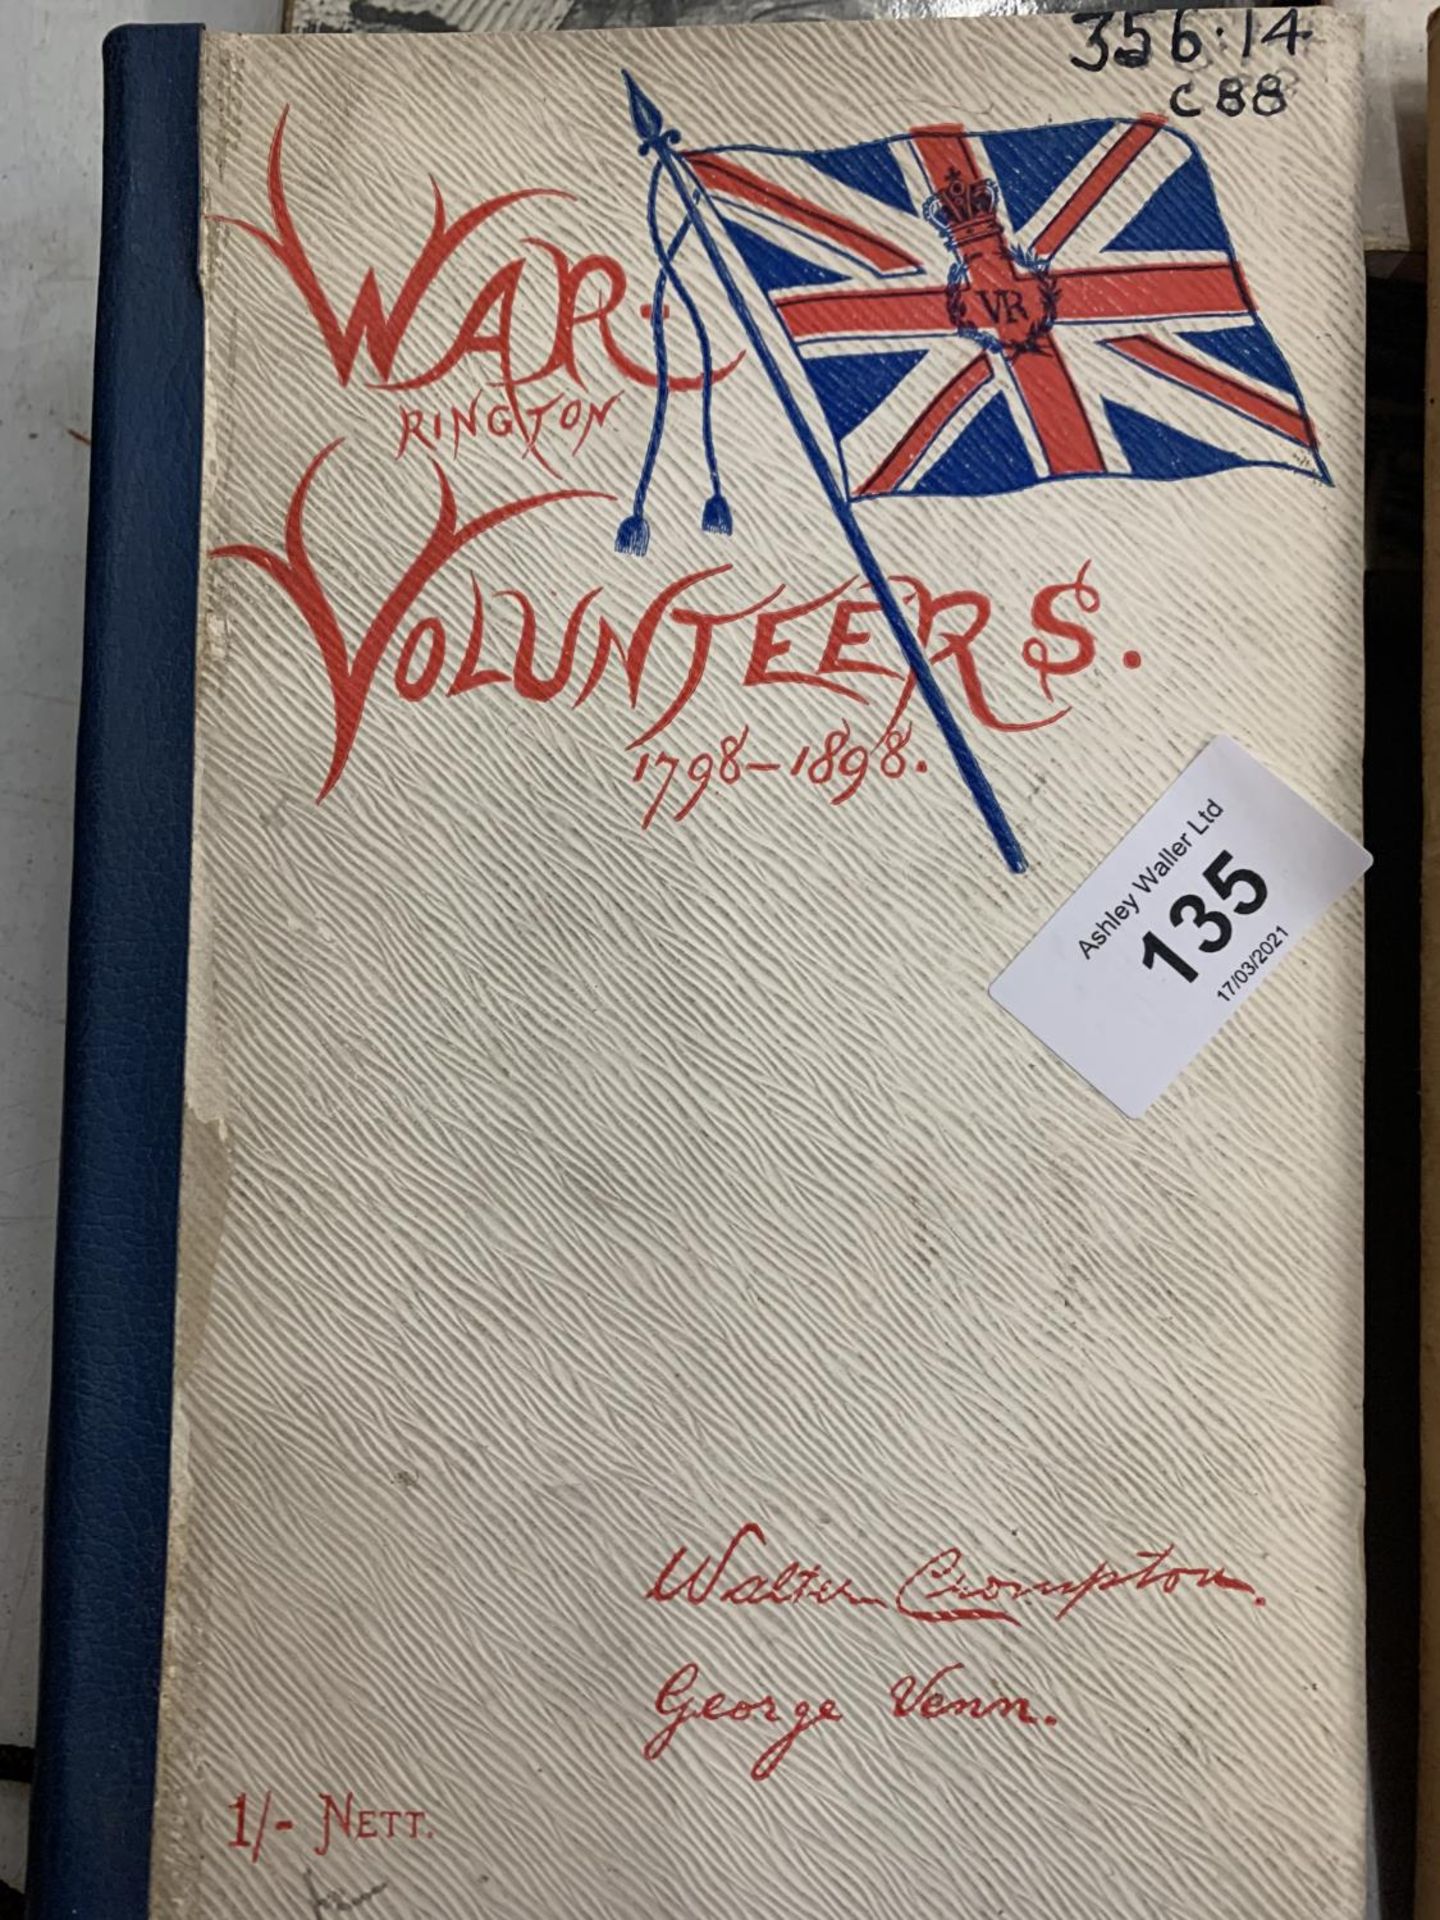 A BRITISH WORLD WAR II BOOK ON FIELDCRAFT AND BATTLE DRILL, WARRINGTON VOLUNTEERS 1798-1898, WWII - Image 5 of 10